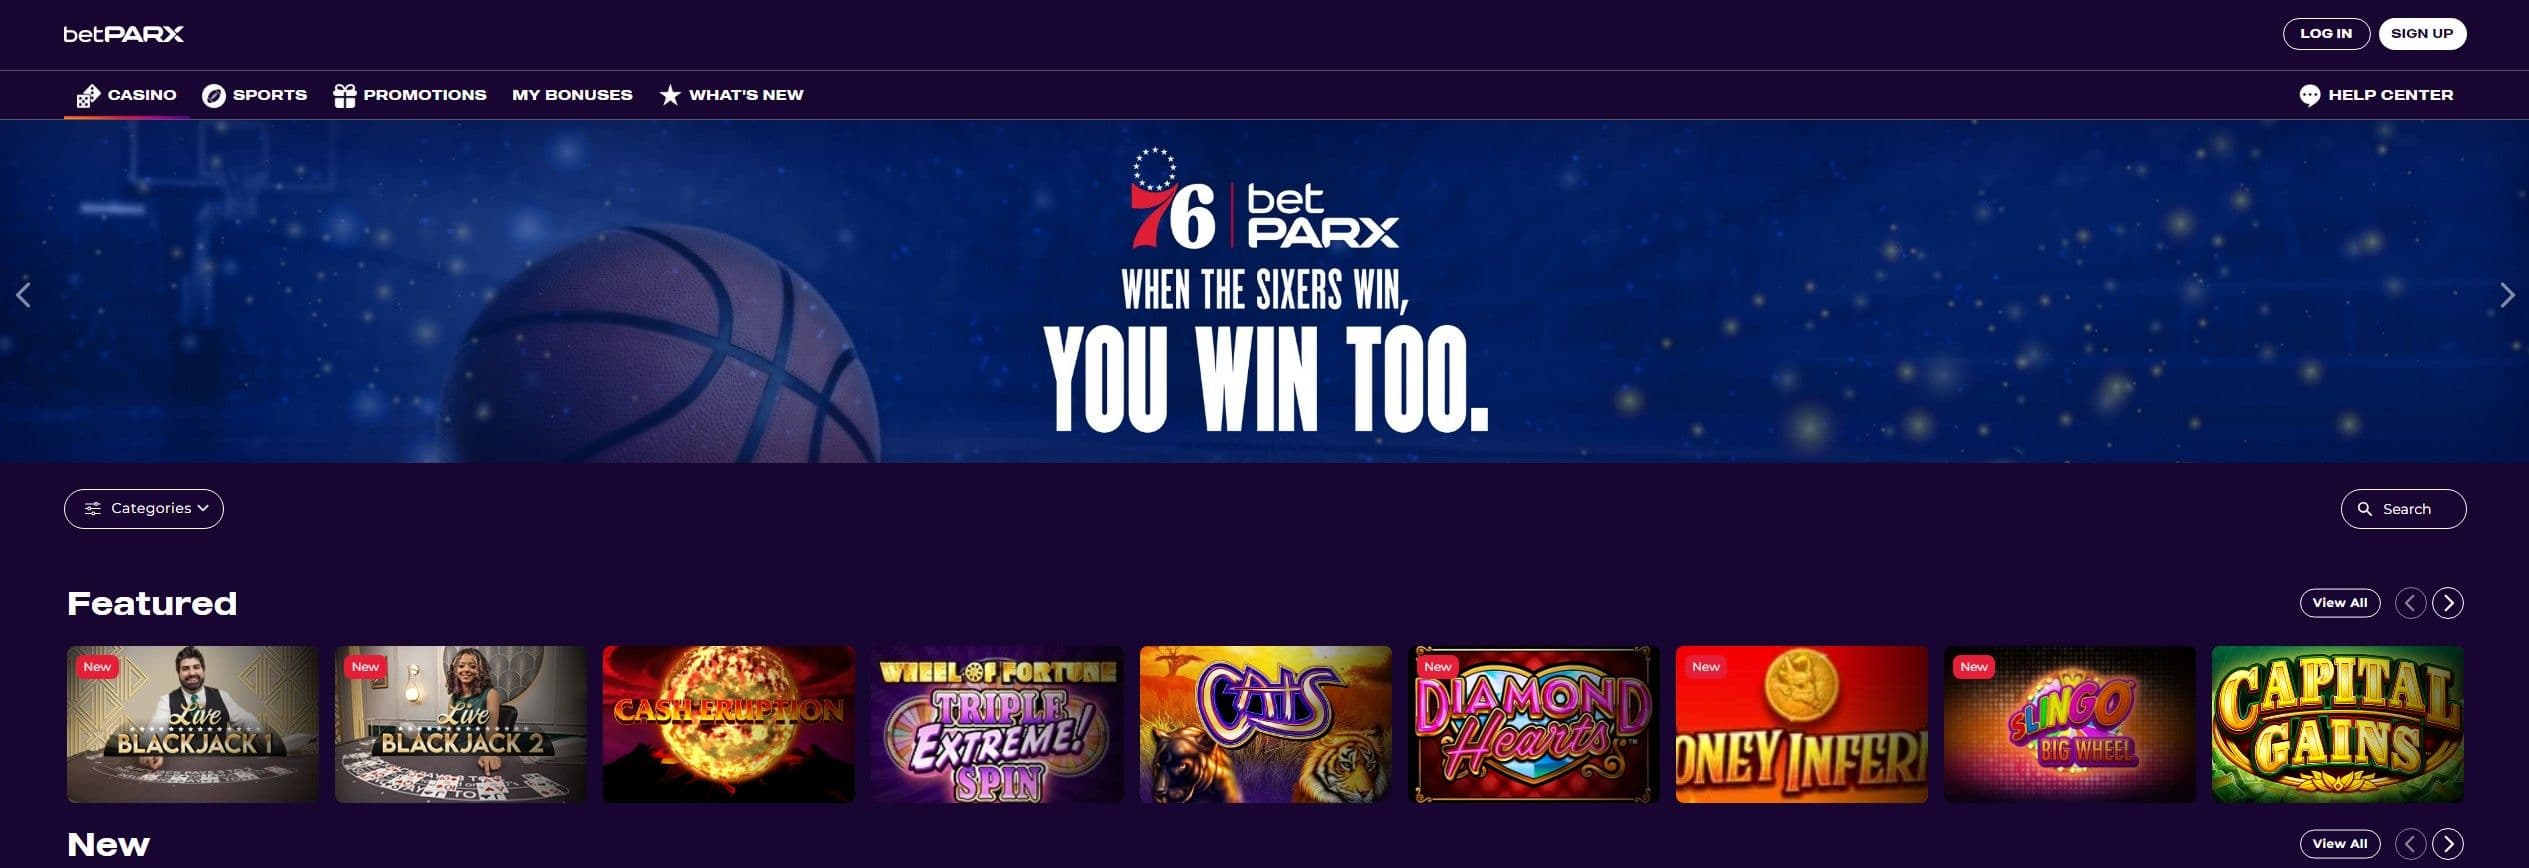 betPARX Online Casino